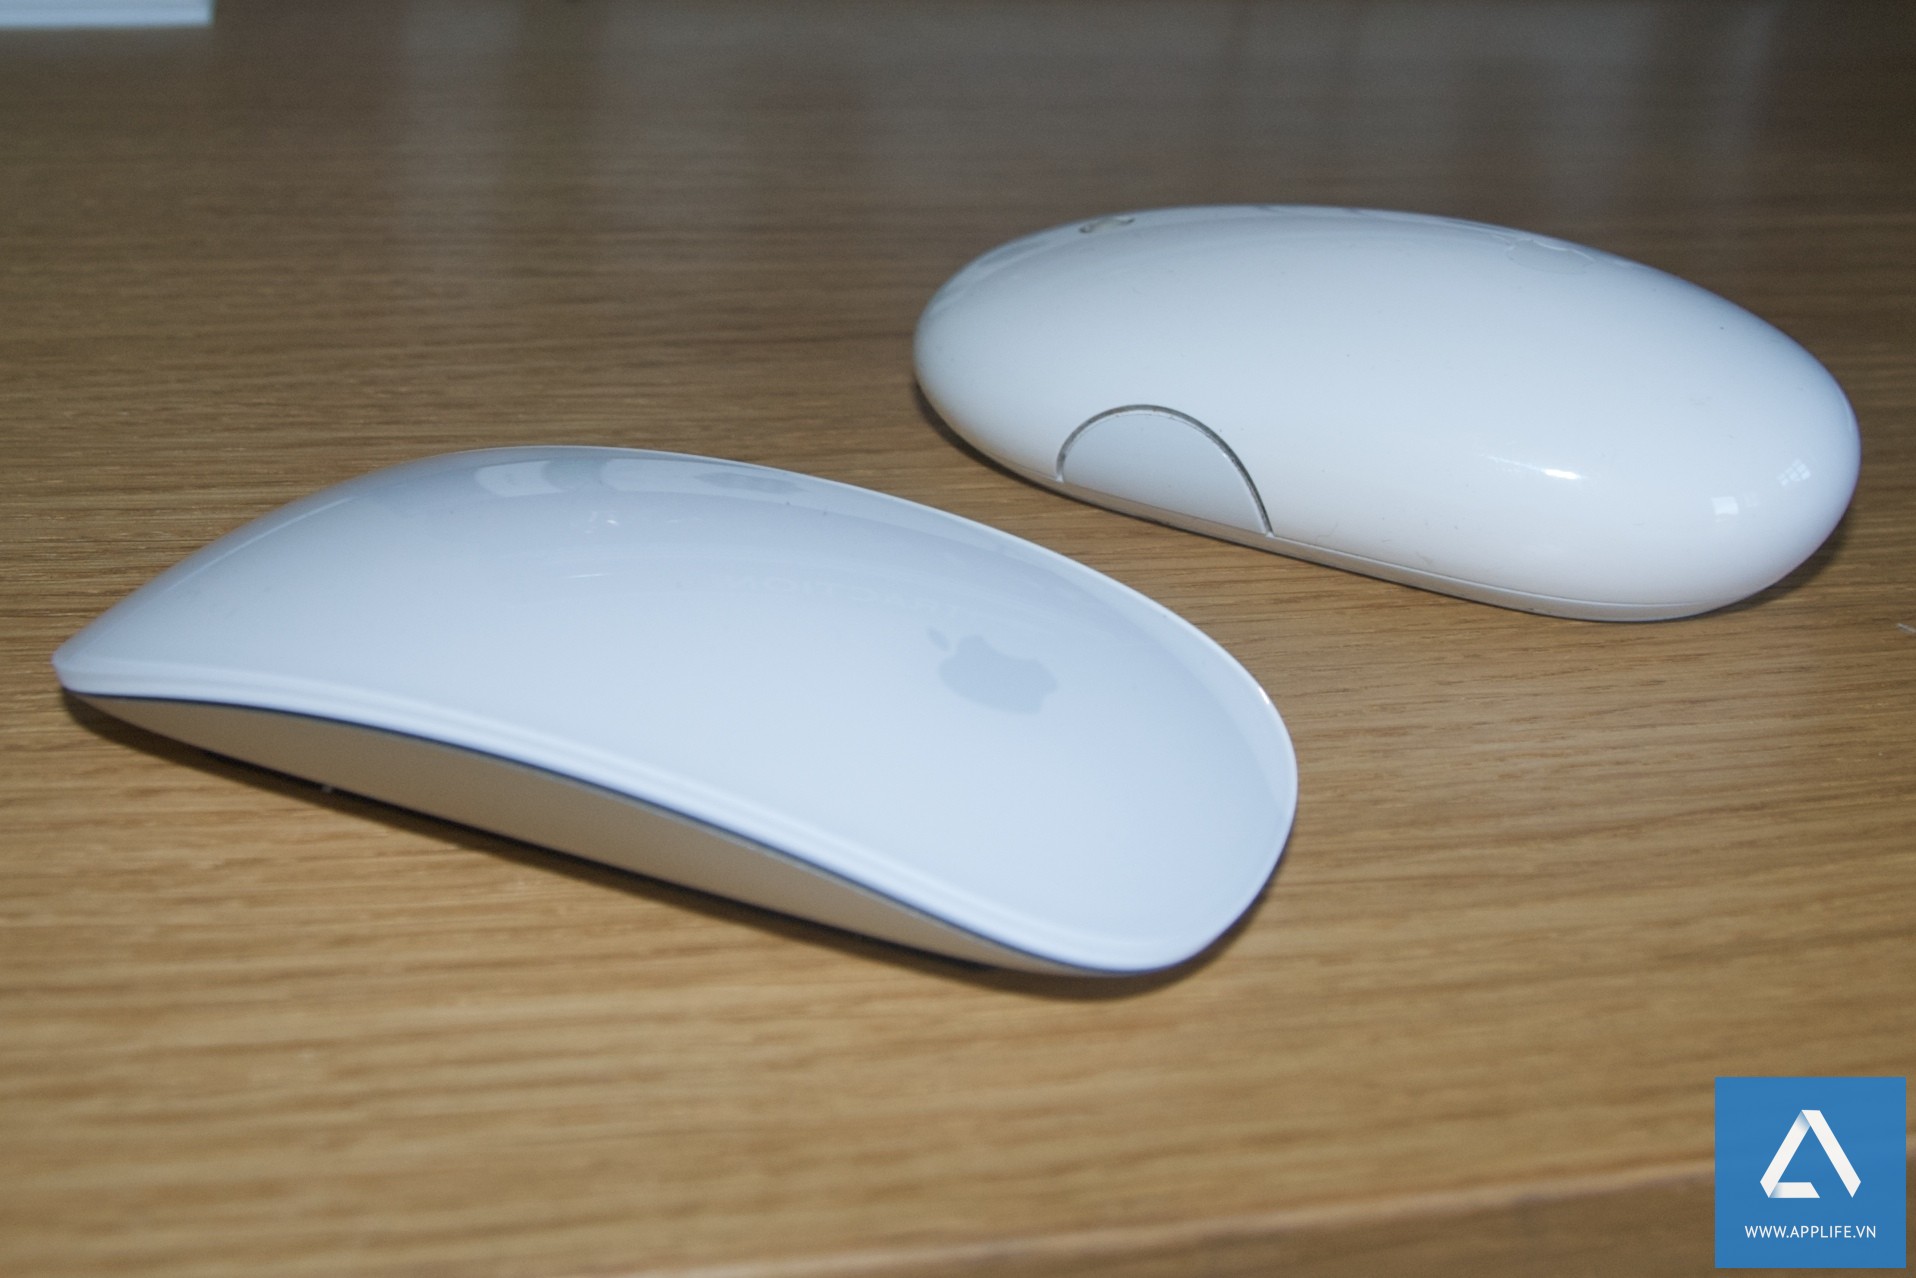 Magic Mouse và Mighty Mouse, 2 loại chuột Apple phổ biến hiện nay – Wikipedia